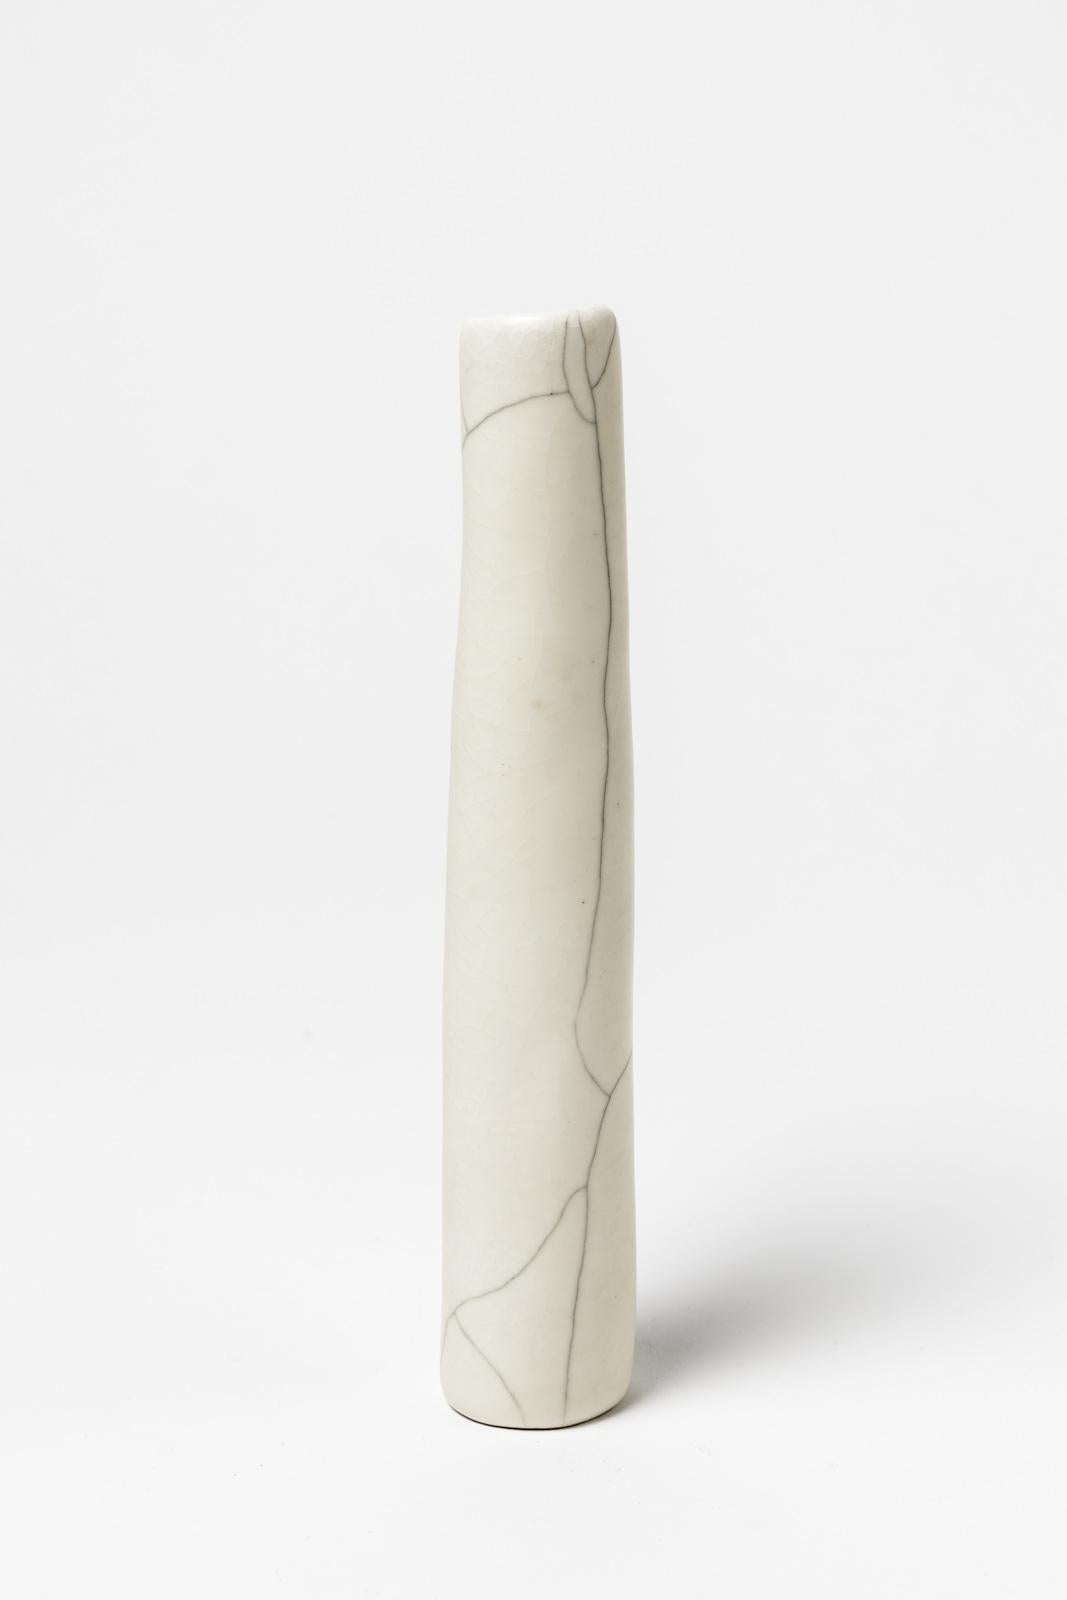 Modern White and Black Porcelain Freeform Sculpture Vase by Marc Uzan Midcentury For Sale